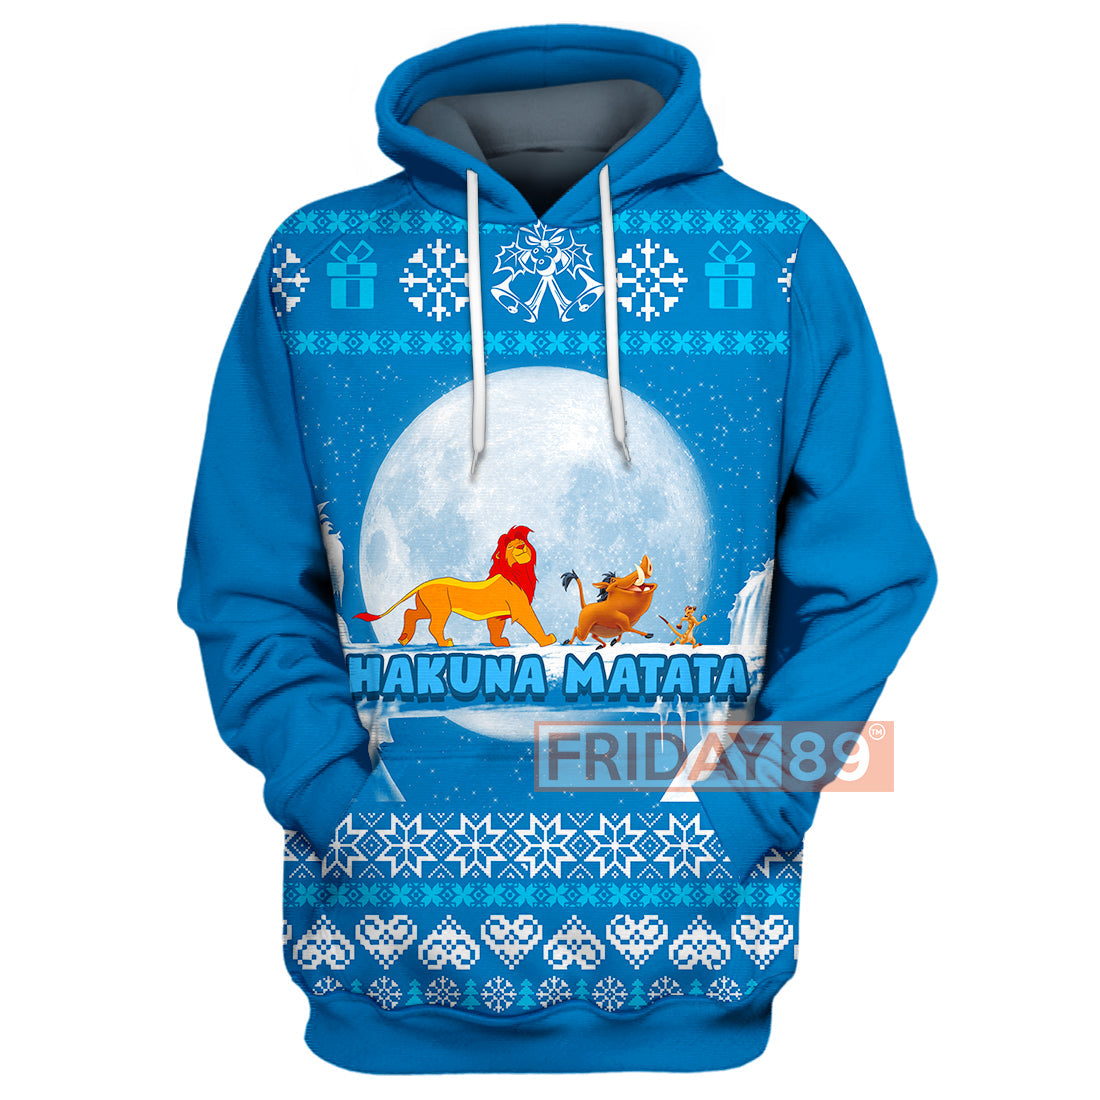 Unifinz LK T-shirt Hakuna Matata Christmas T-shirt Amazing DN LK Hoodie Sweater Tank 2022